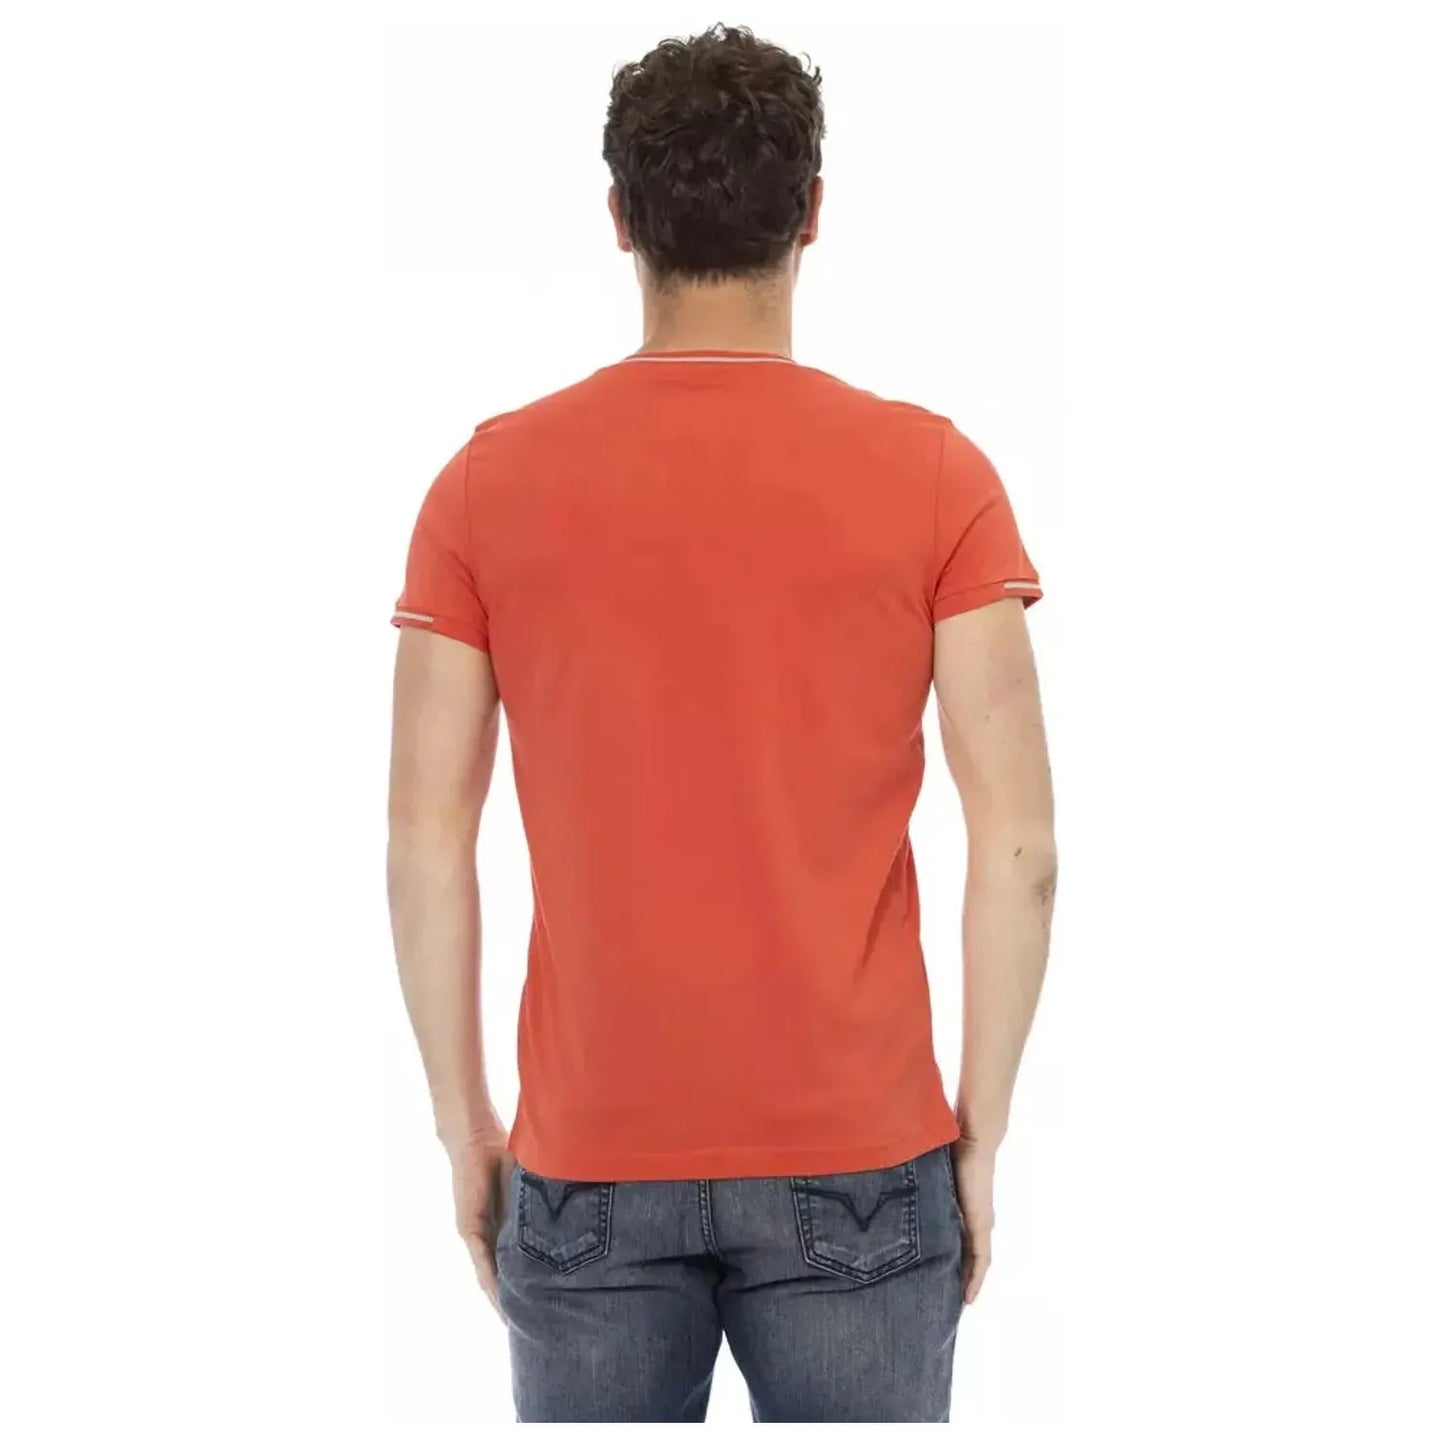 Trussardi Action Vibrant Orange V-Neck Tee with Chest Print orange-cotton-t-shirt-5